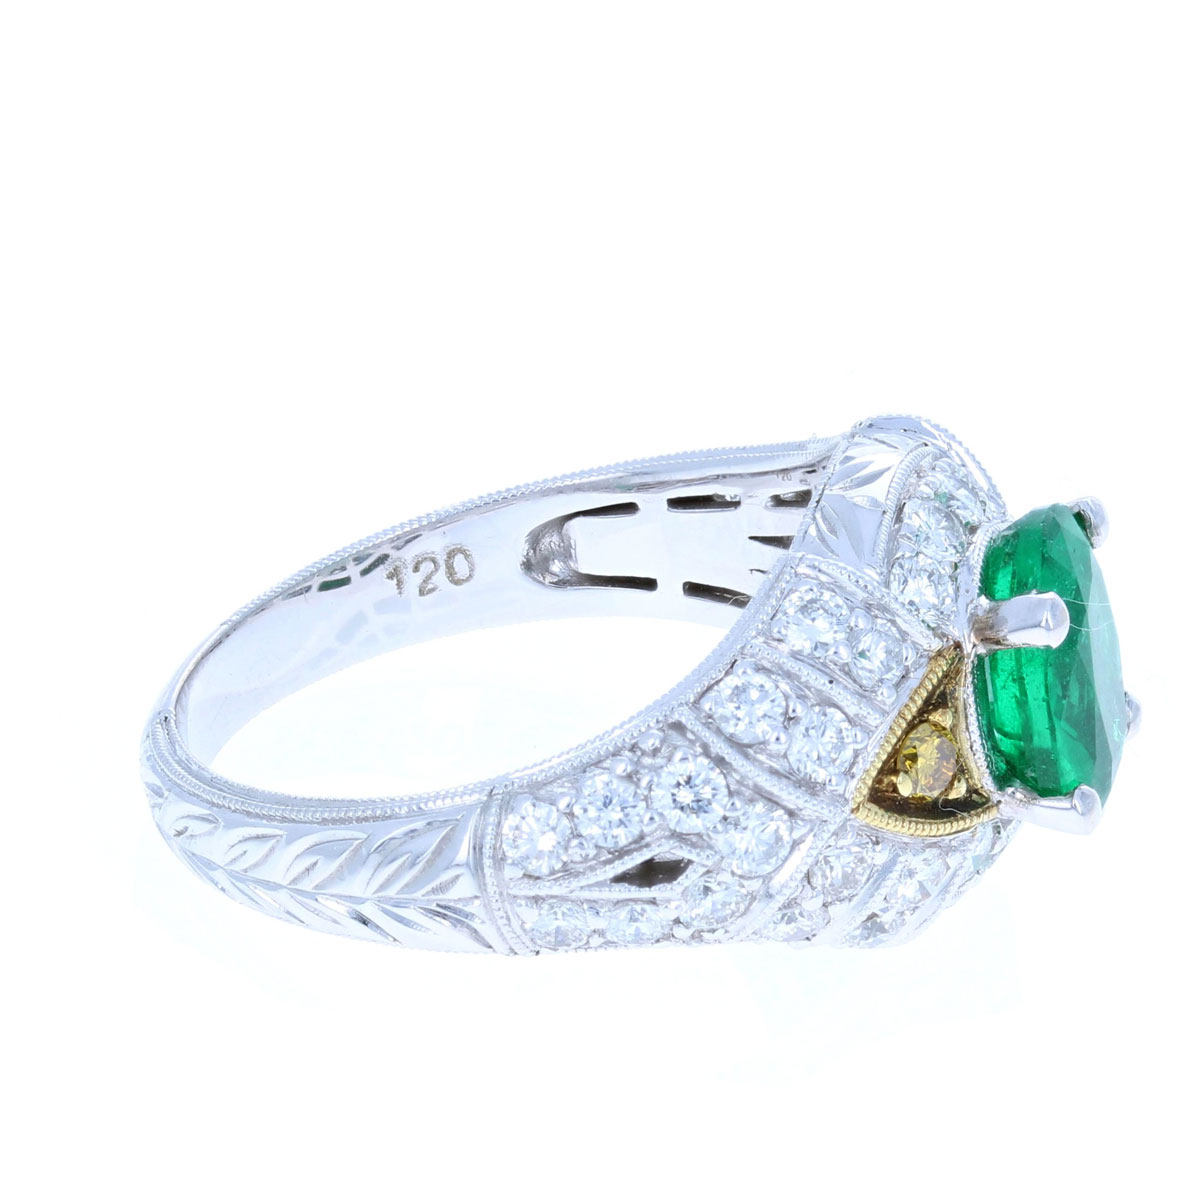 Vintage-Look Emerald Diamond Ring 18KT